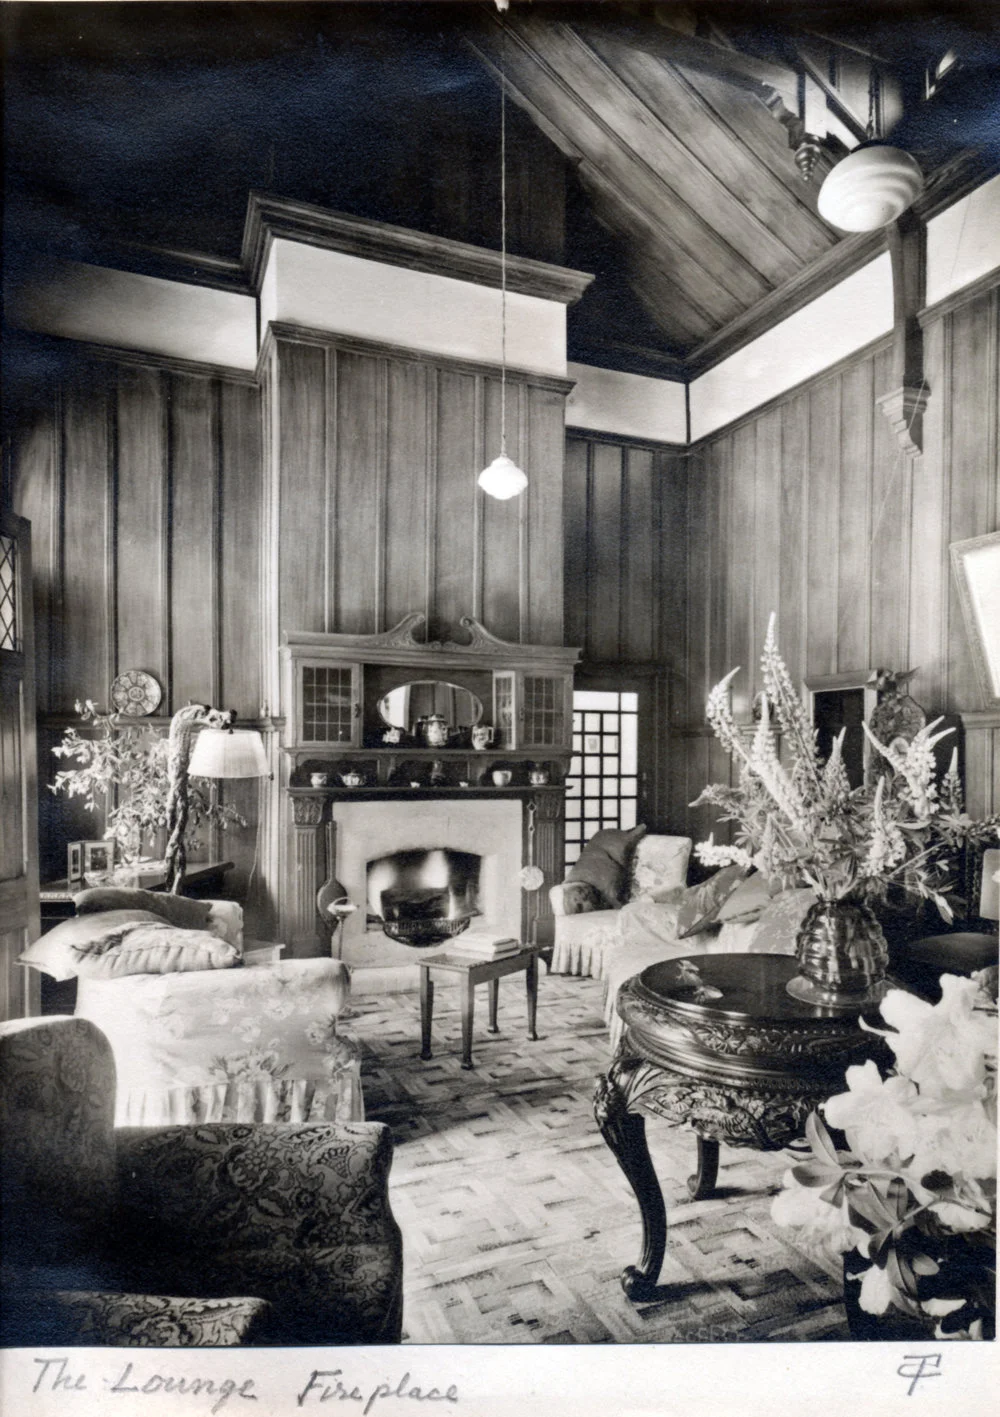 Murdoch house 5; the lounge fireplace.